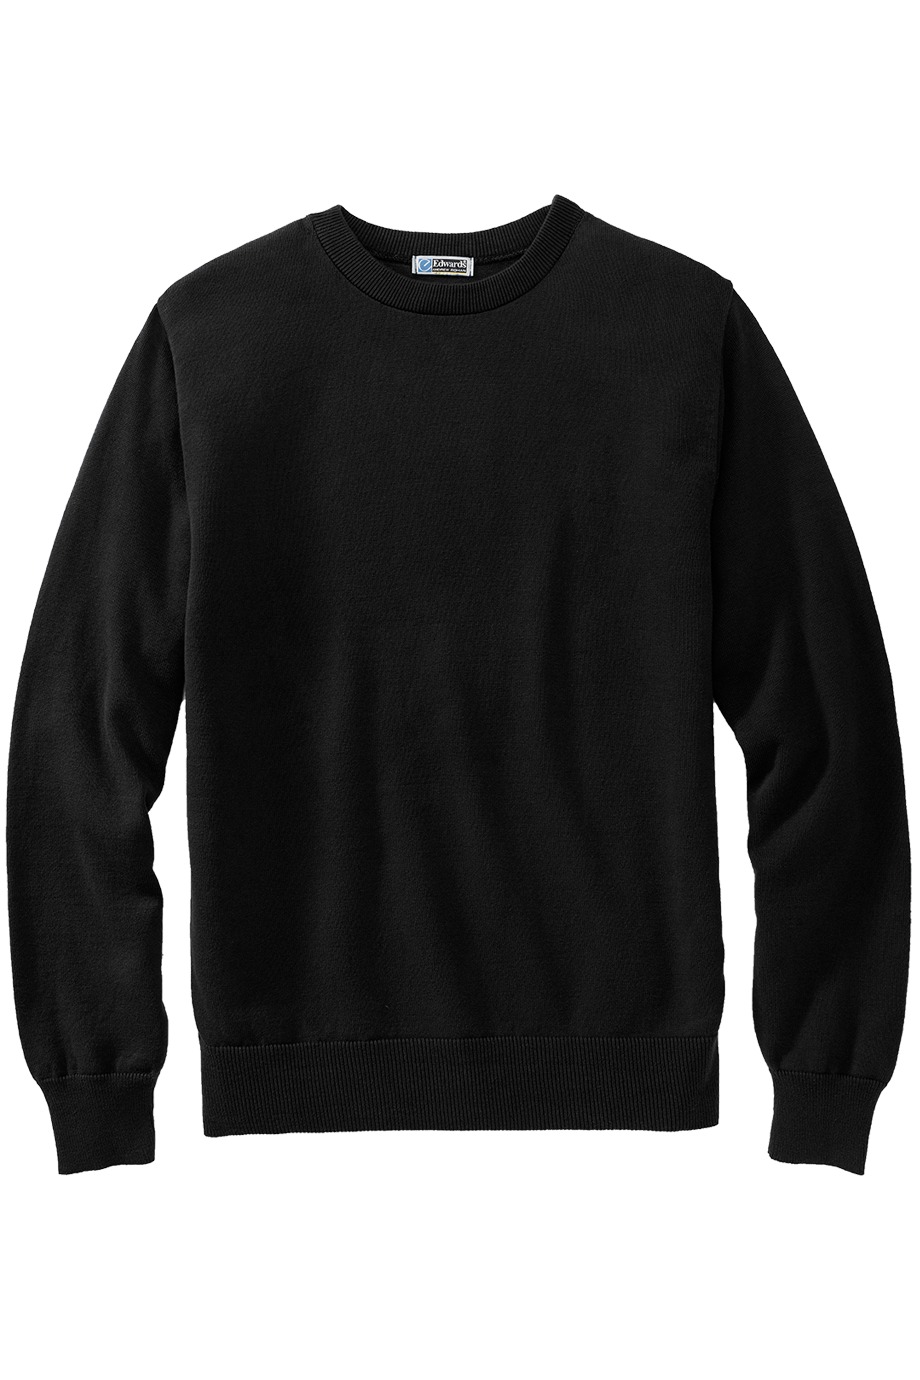 Edwards Garment 4086 - Fine Gauge Crew Neck Sweater